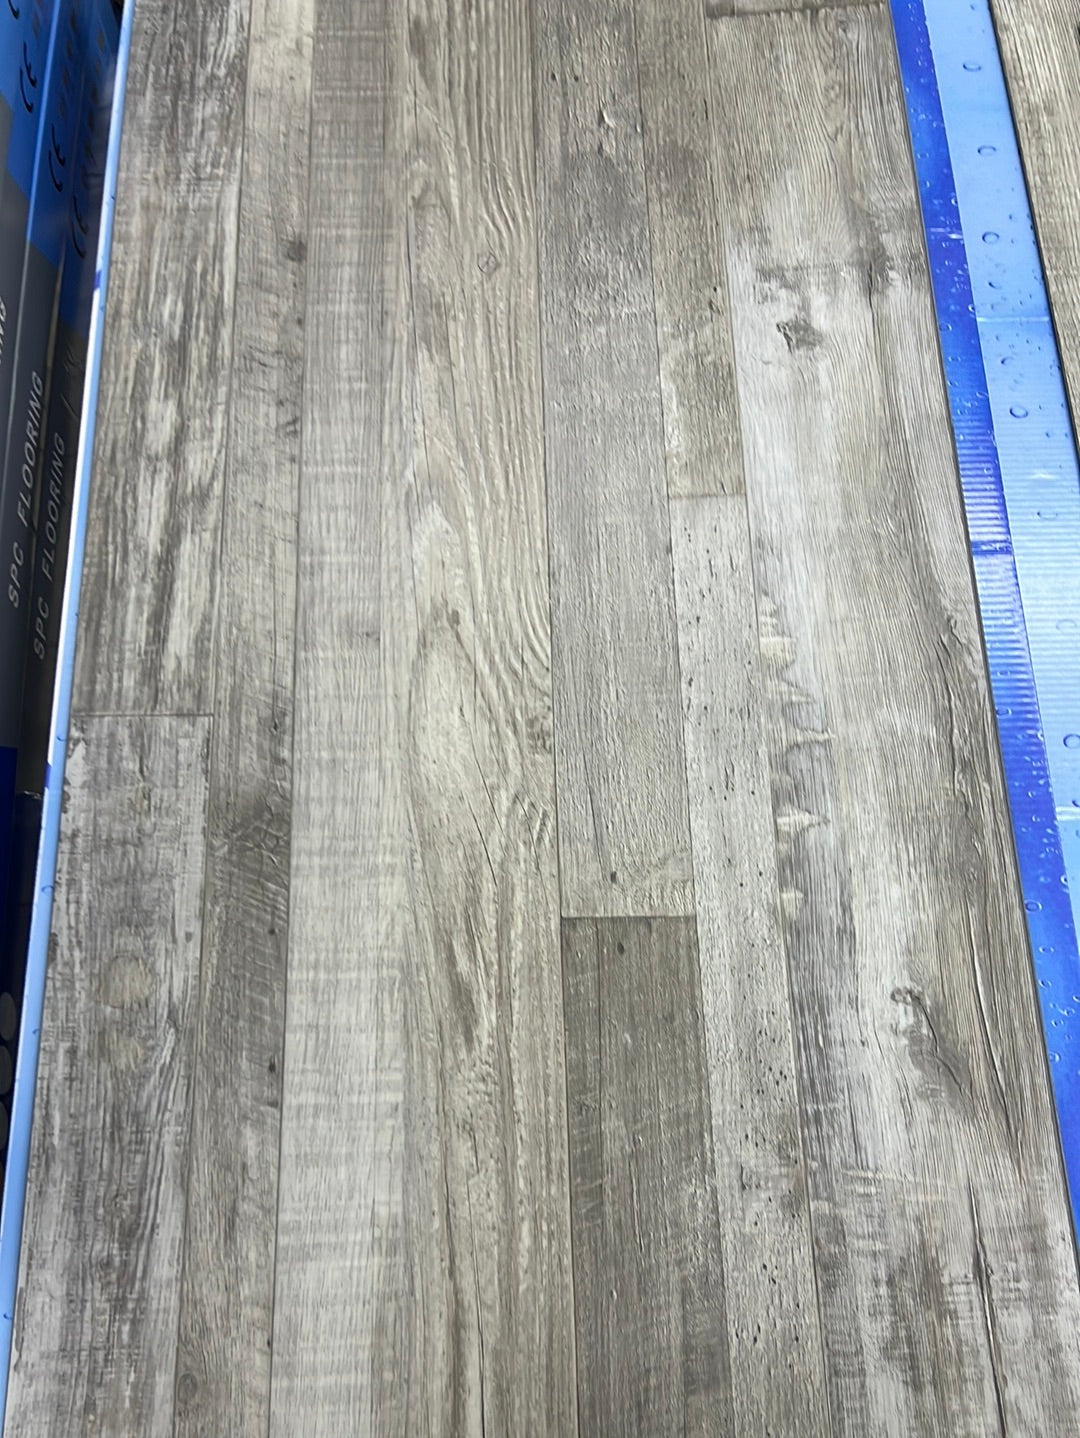 Planks of wood grain vinyl